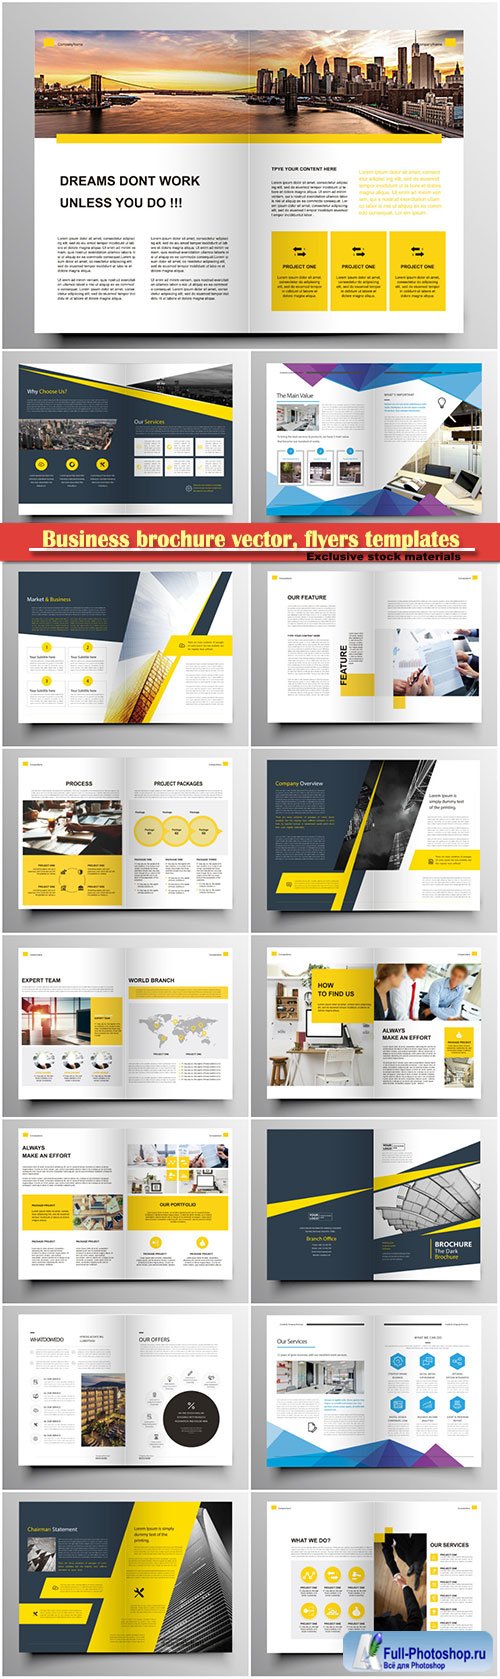 Business brochure vector, flyers templates, report cover design # 96